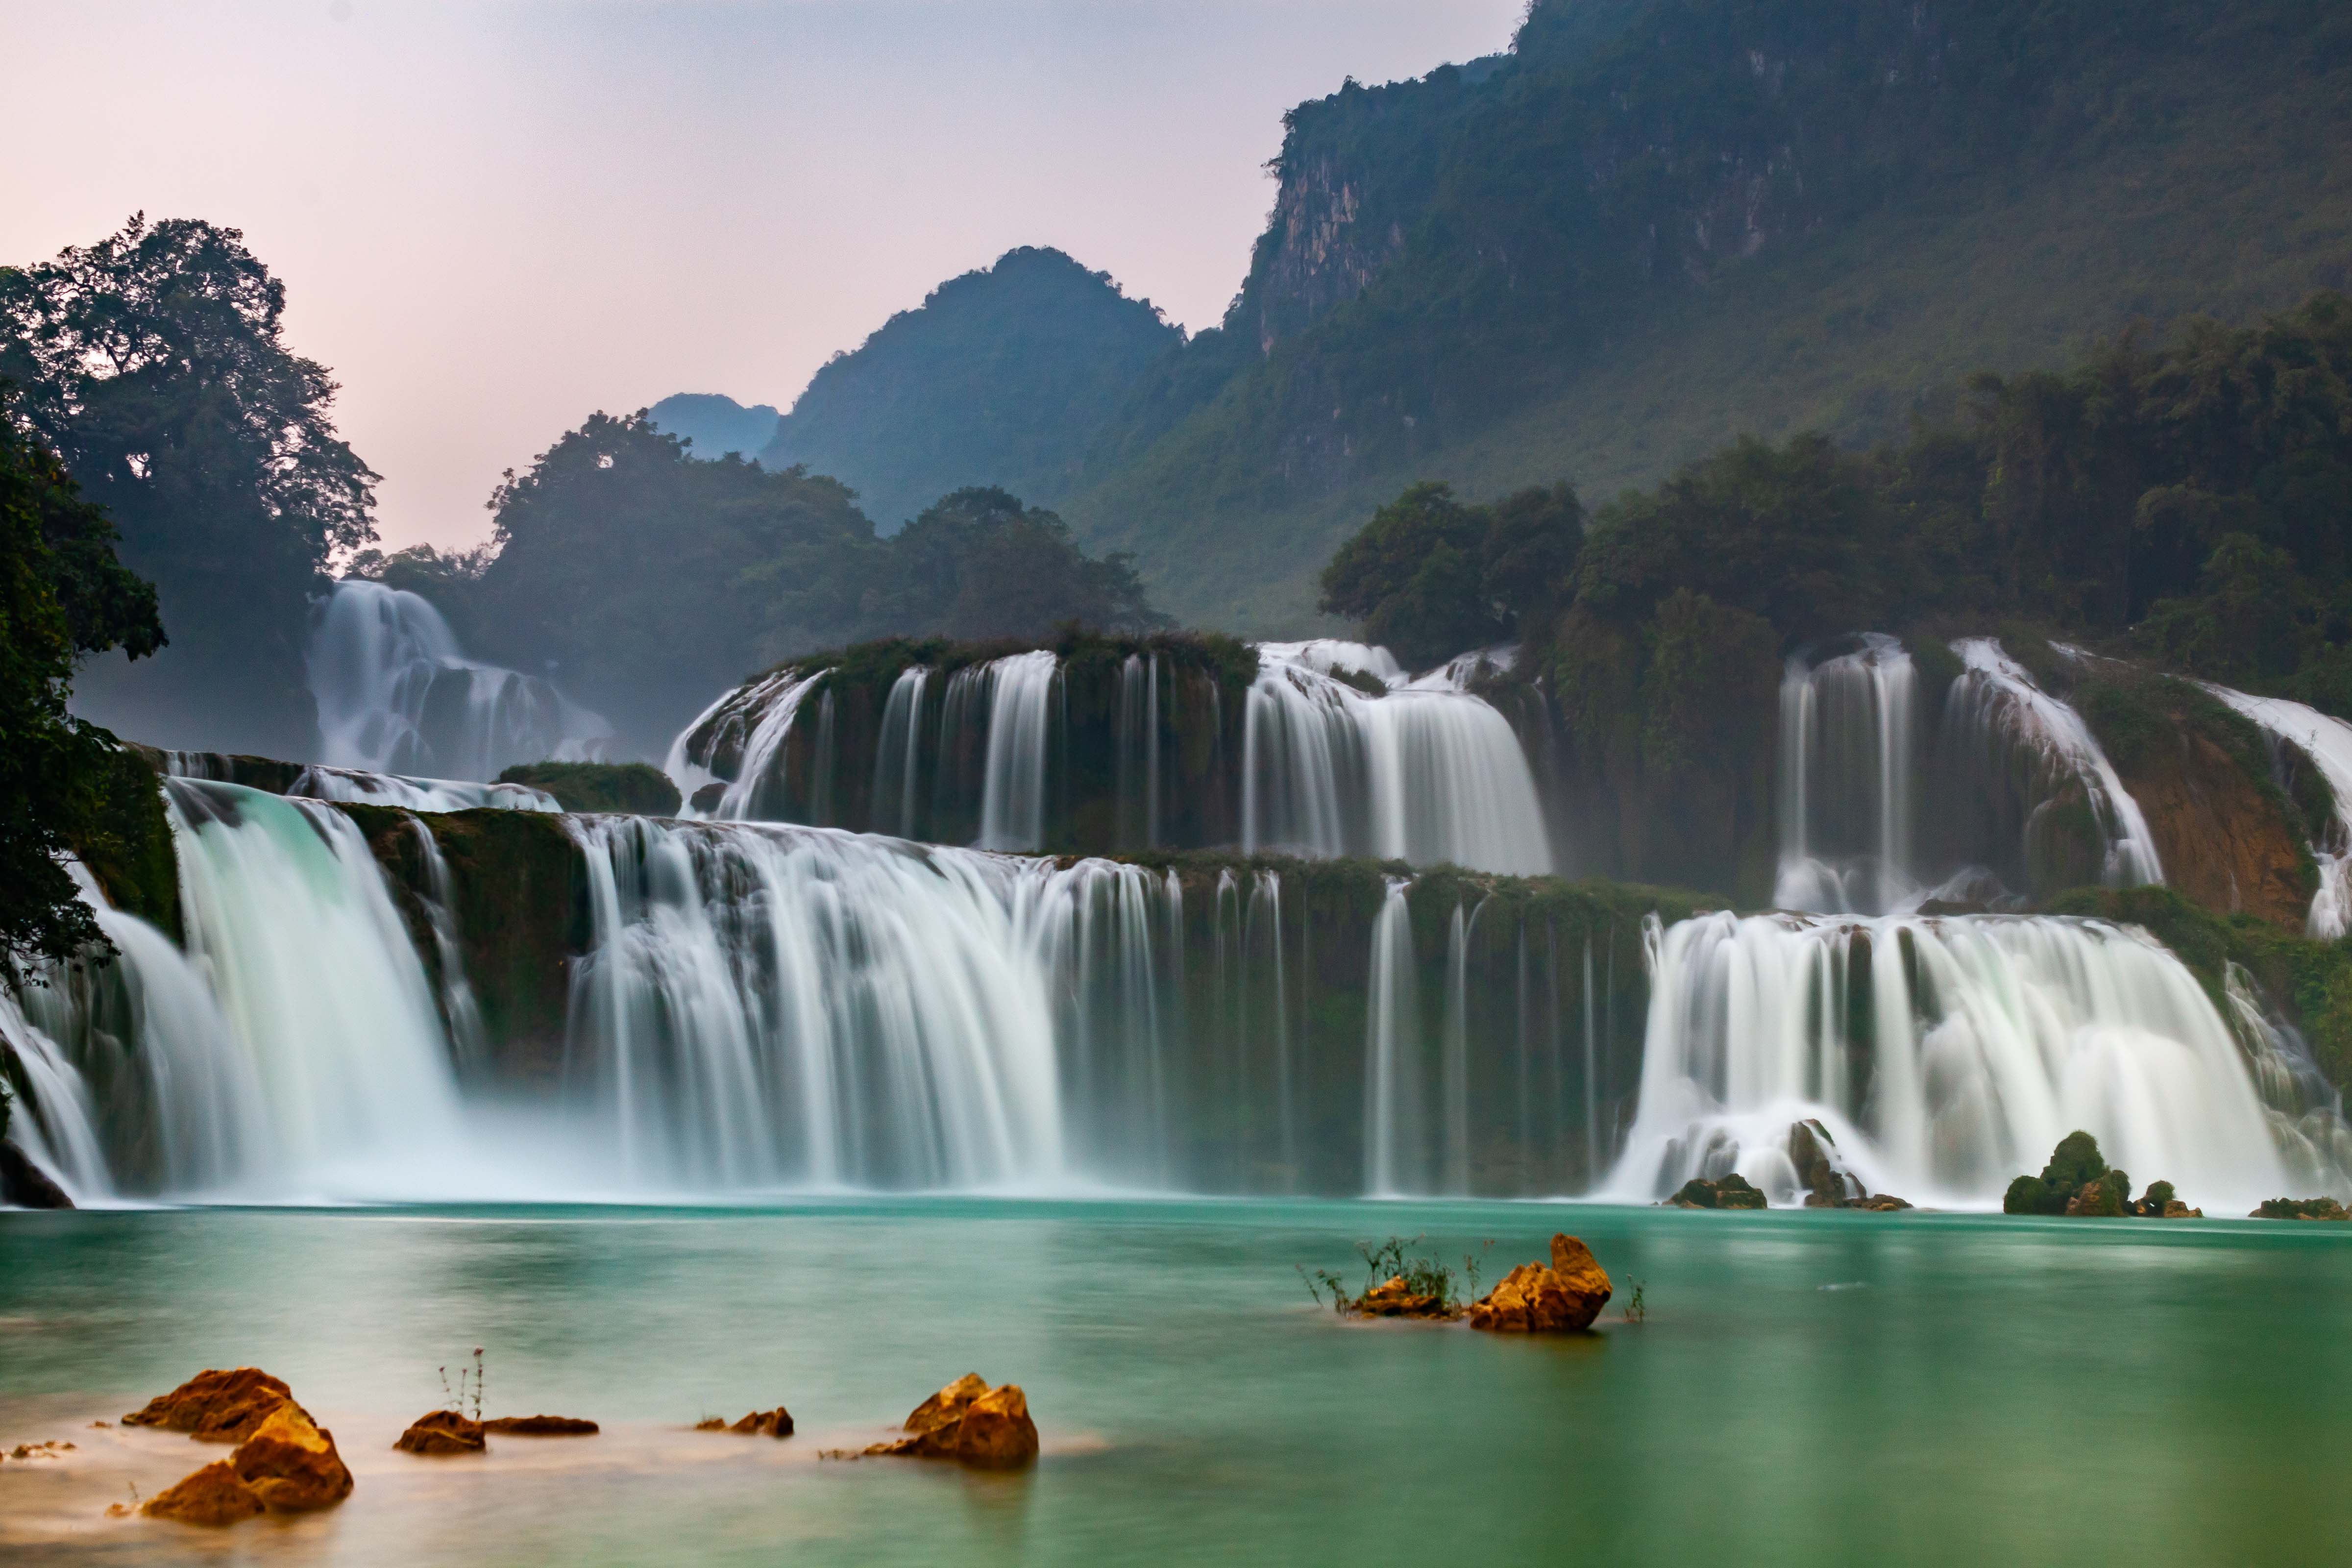 Vietnam, Cao Bang Prov, Waterfall, 2011, IMG 0775